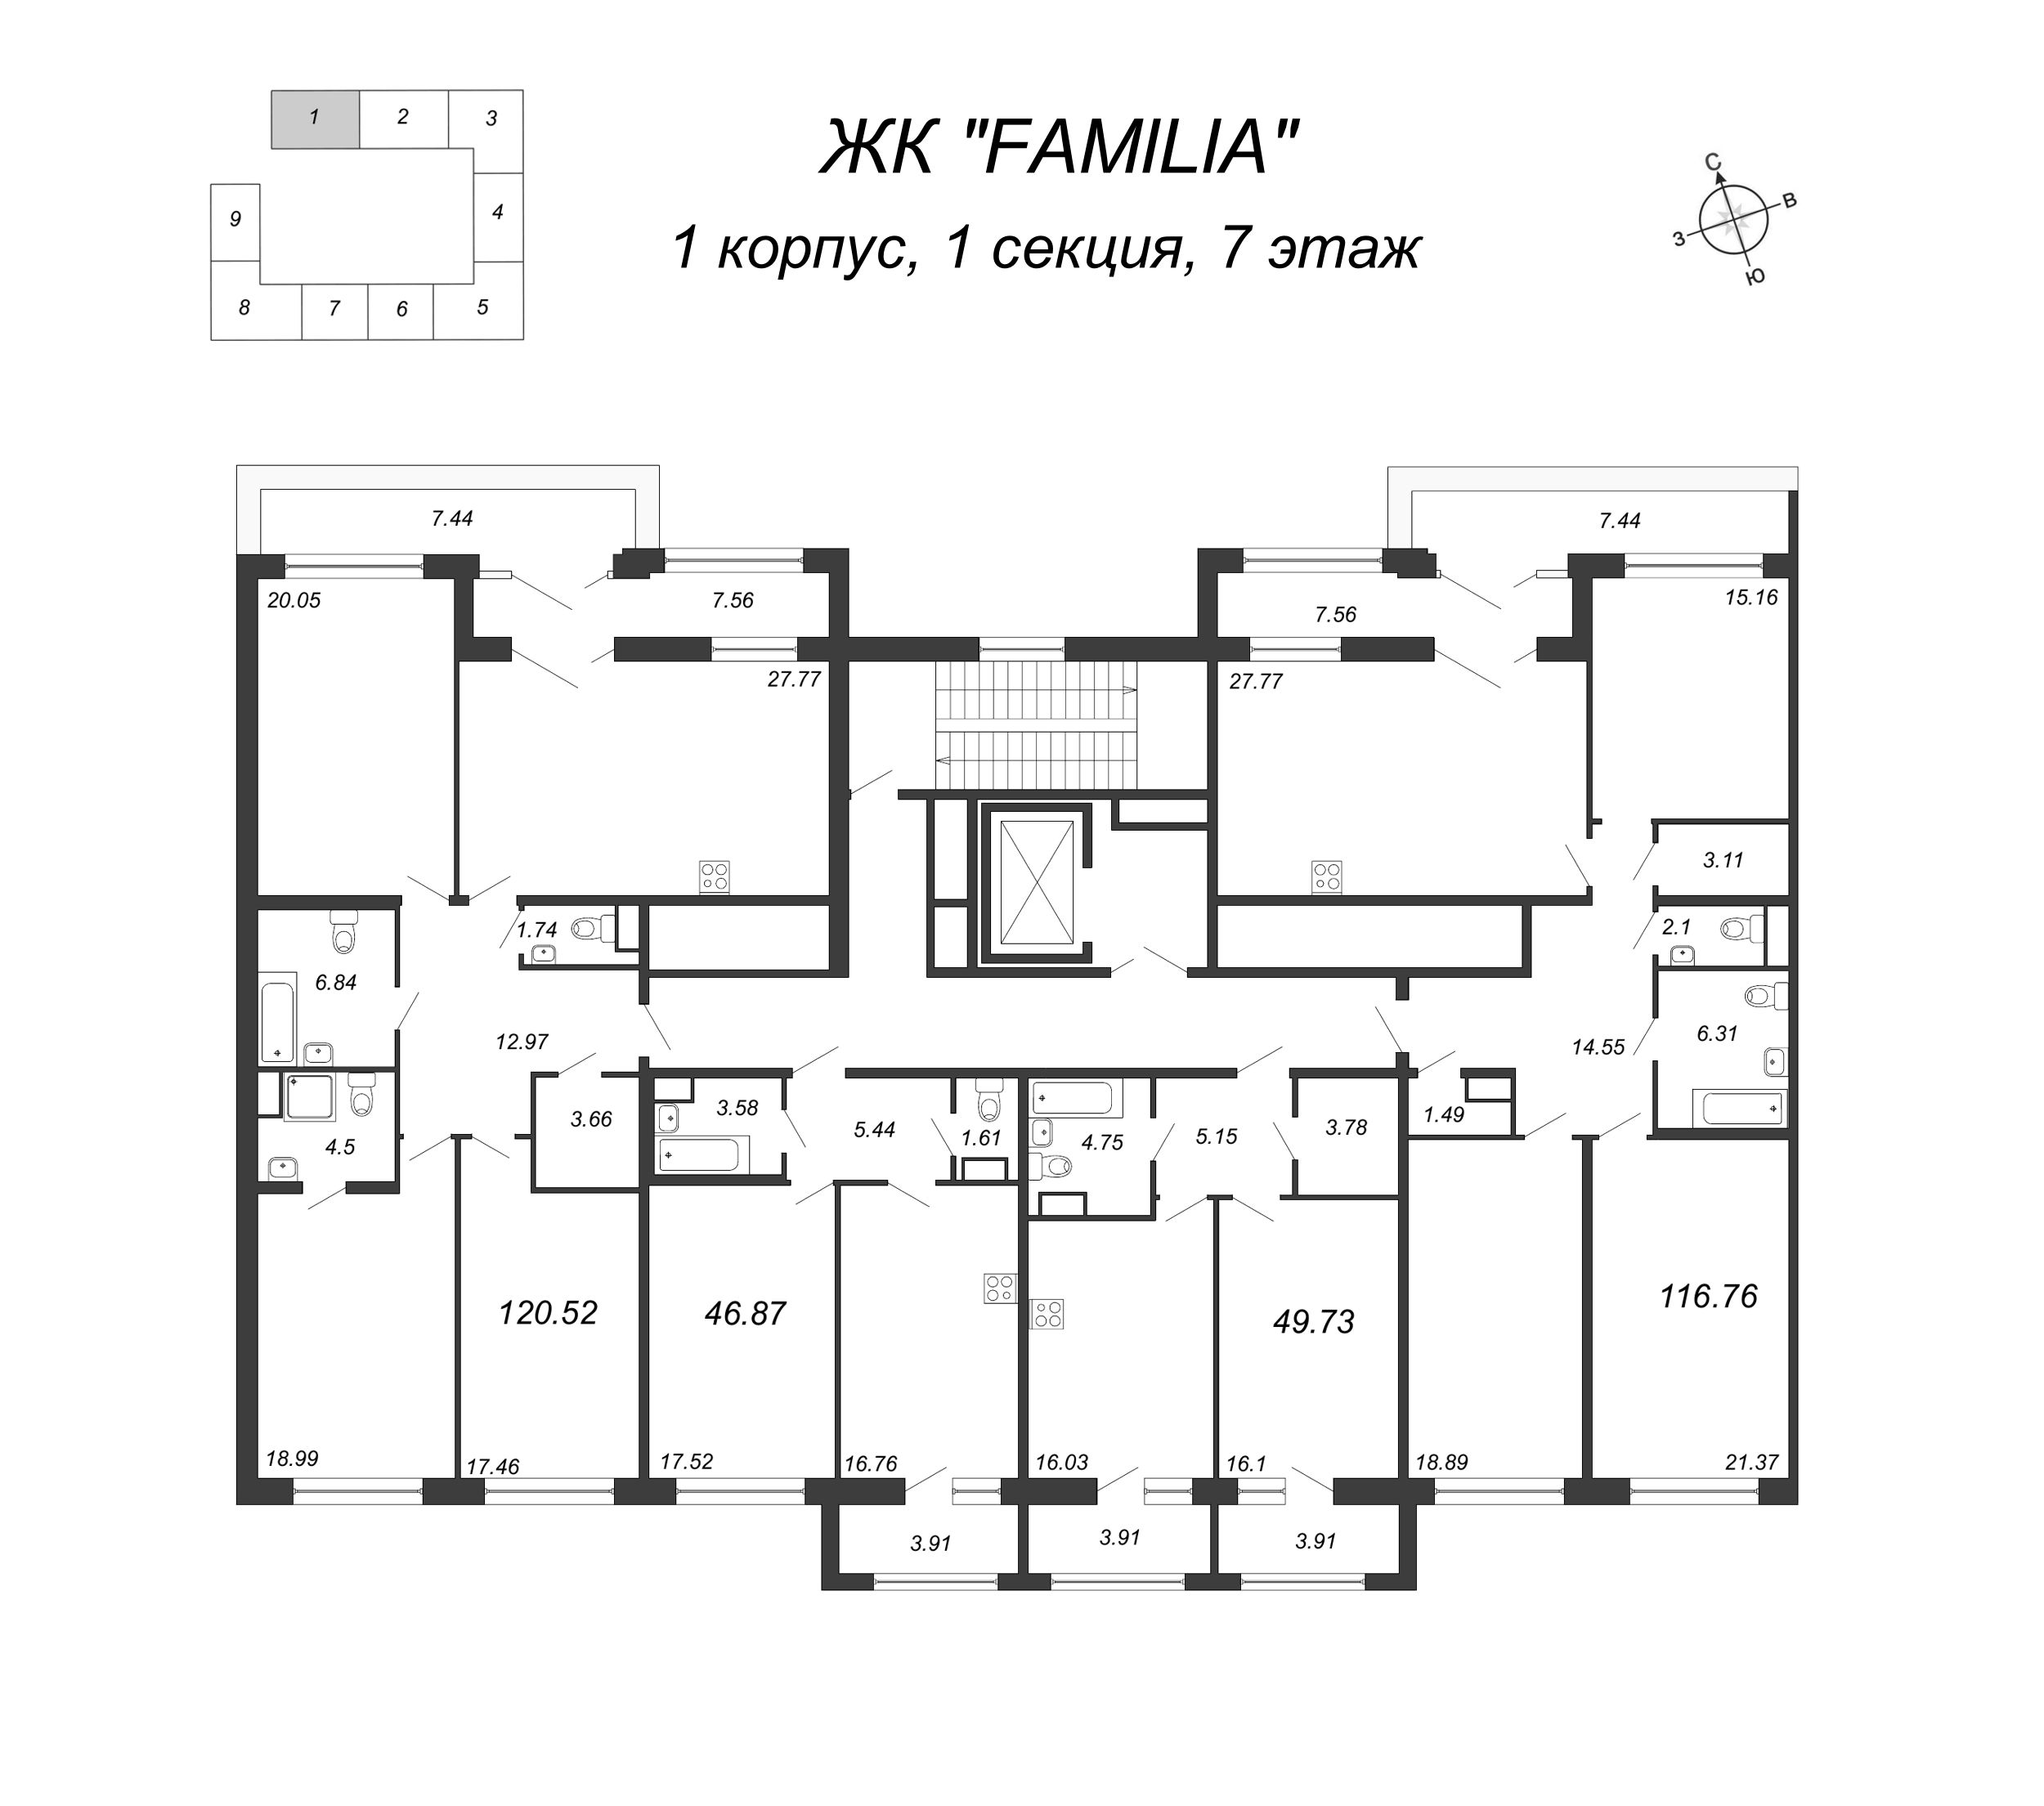 4-комнатная (Евро) квартира, 116.8 м² в ЖК "FAMILIA" - планировка этажа